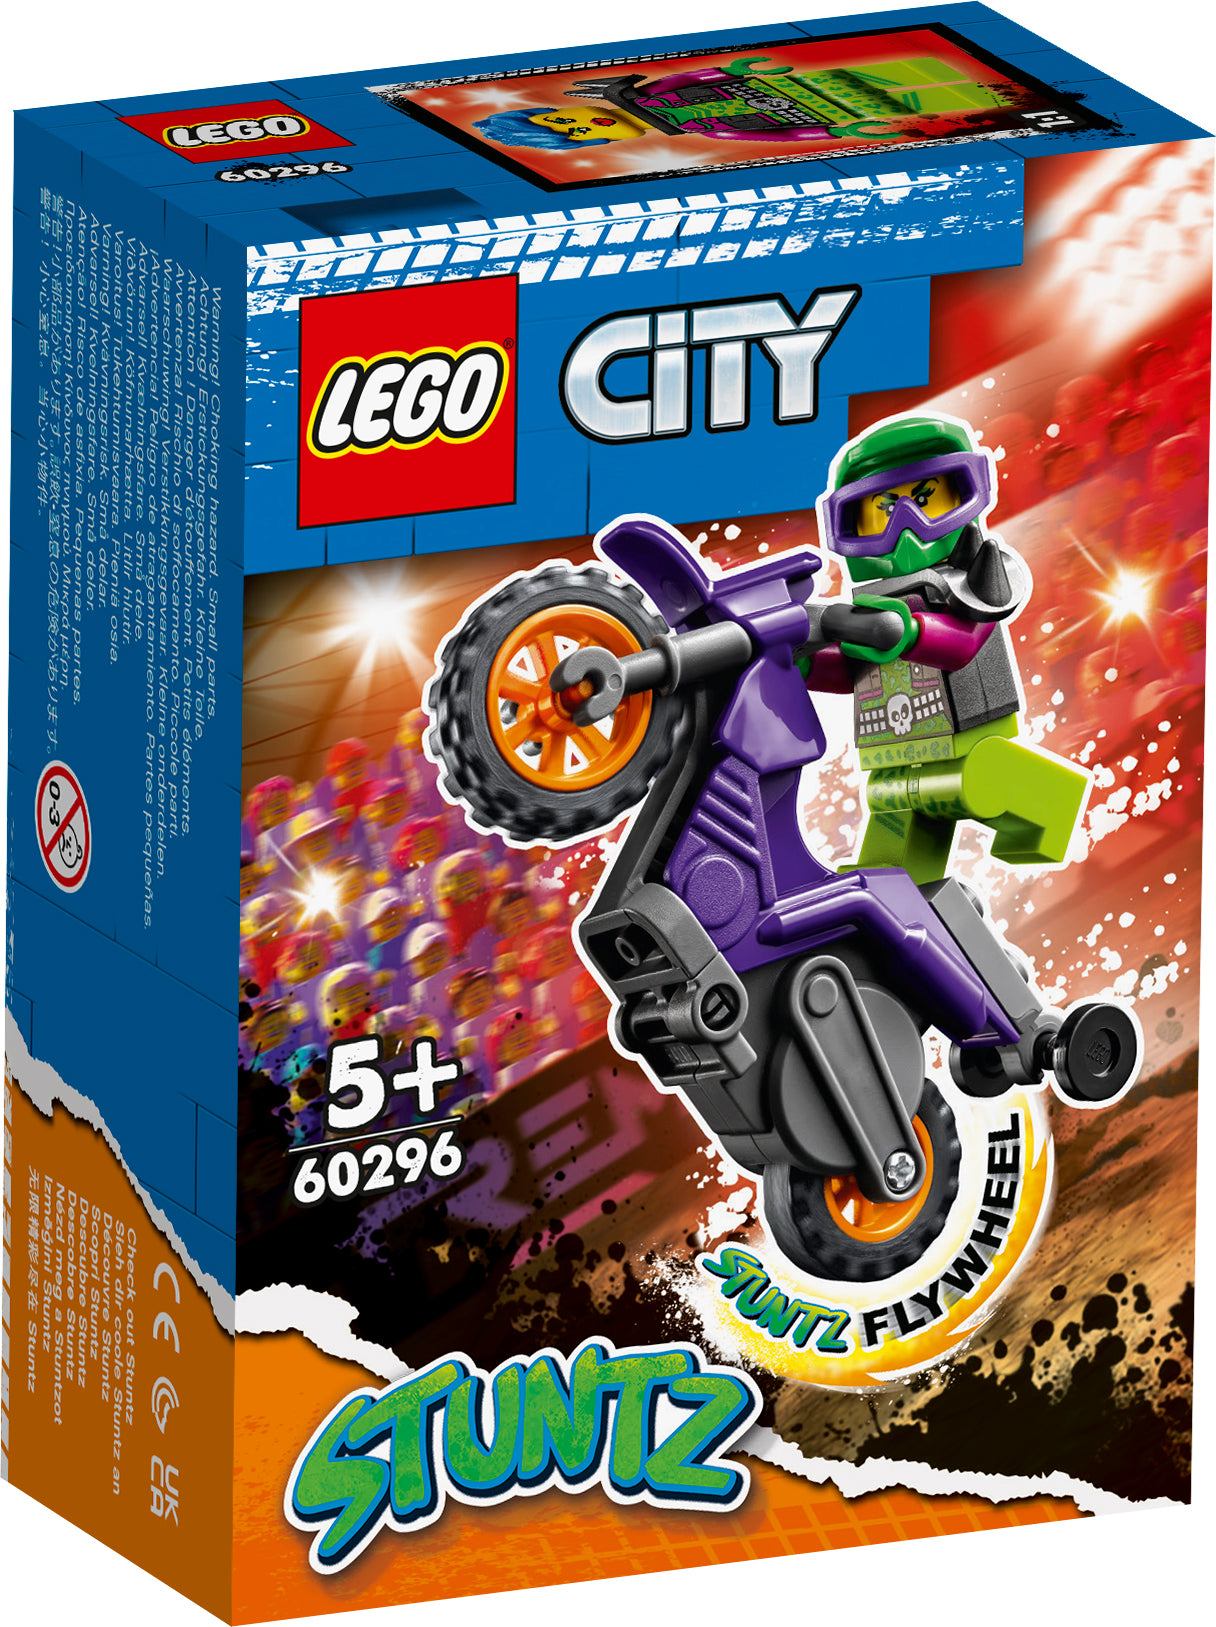 LEGO City Wheelie Stunt Bike